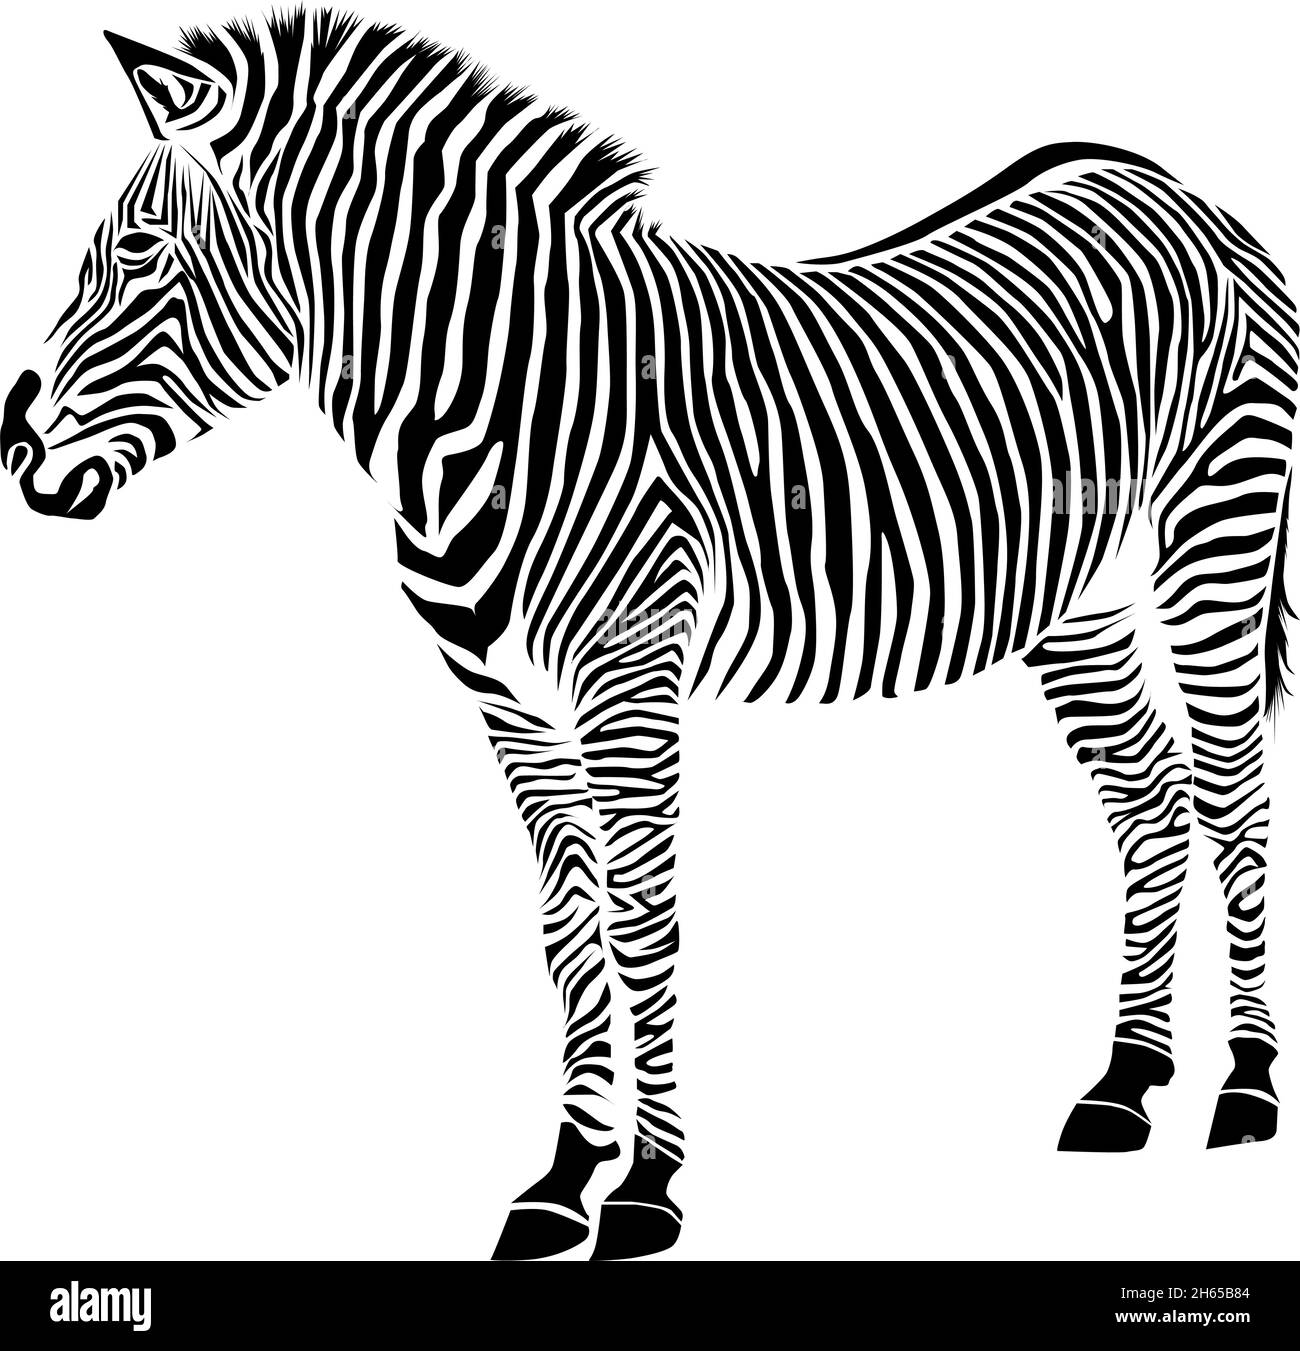 Zebra isoliert auf weißem Hintergrund. Zebra-Vektor-Illustration. zebramuster Stock Vektor